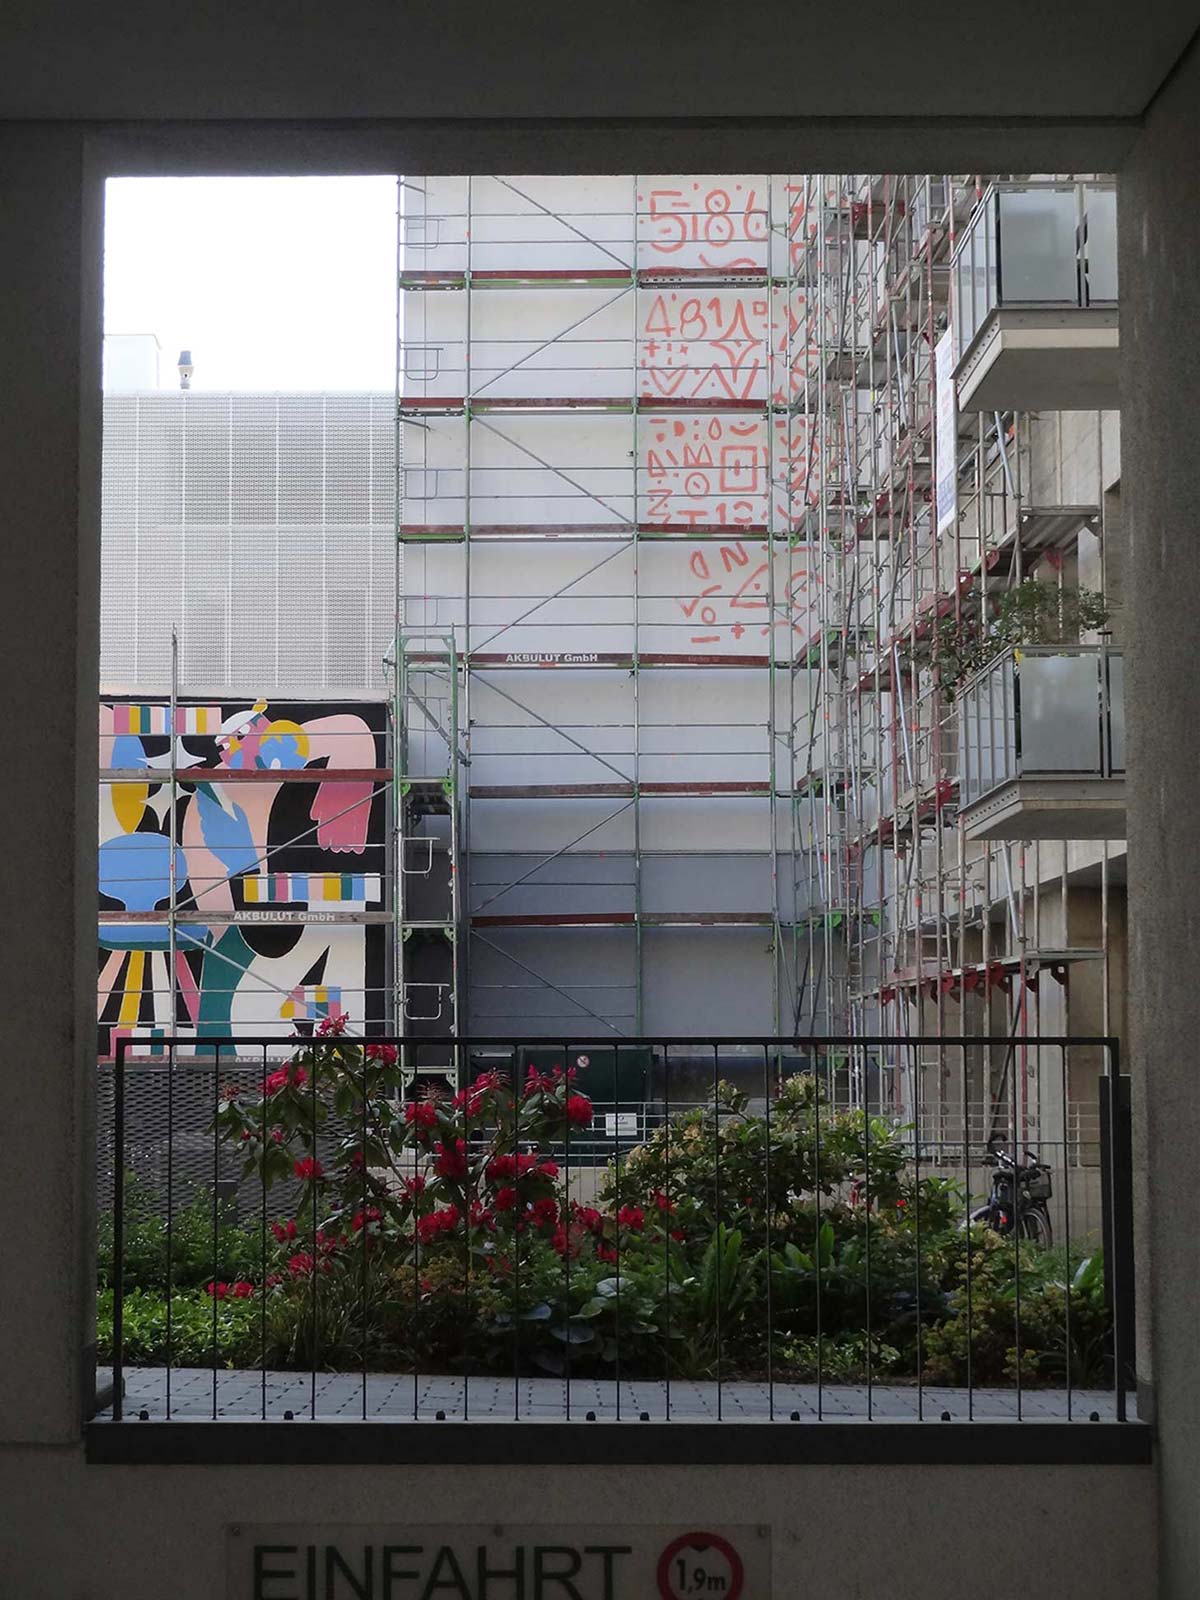 Mural Art Gallery in Frankfurt: Wetopia - We paint the city